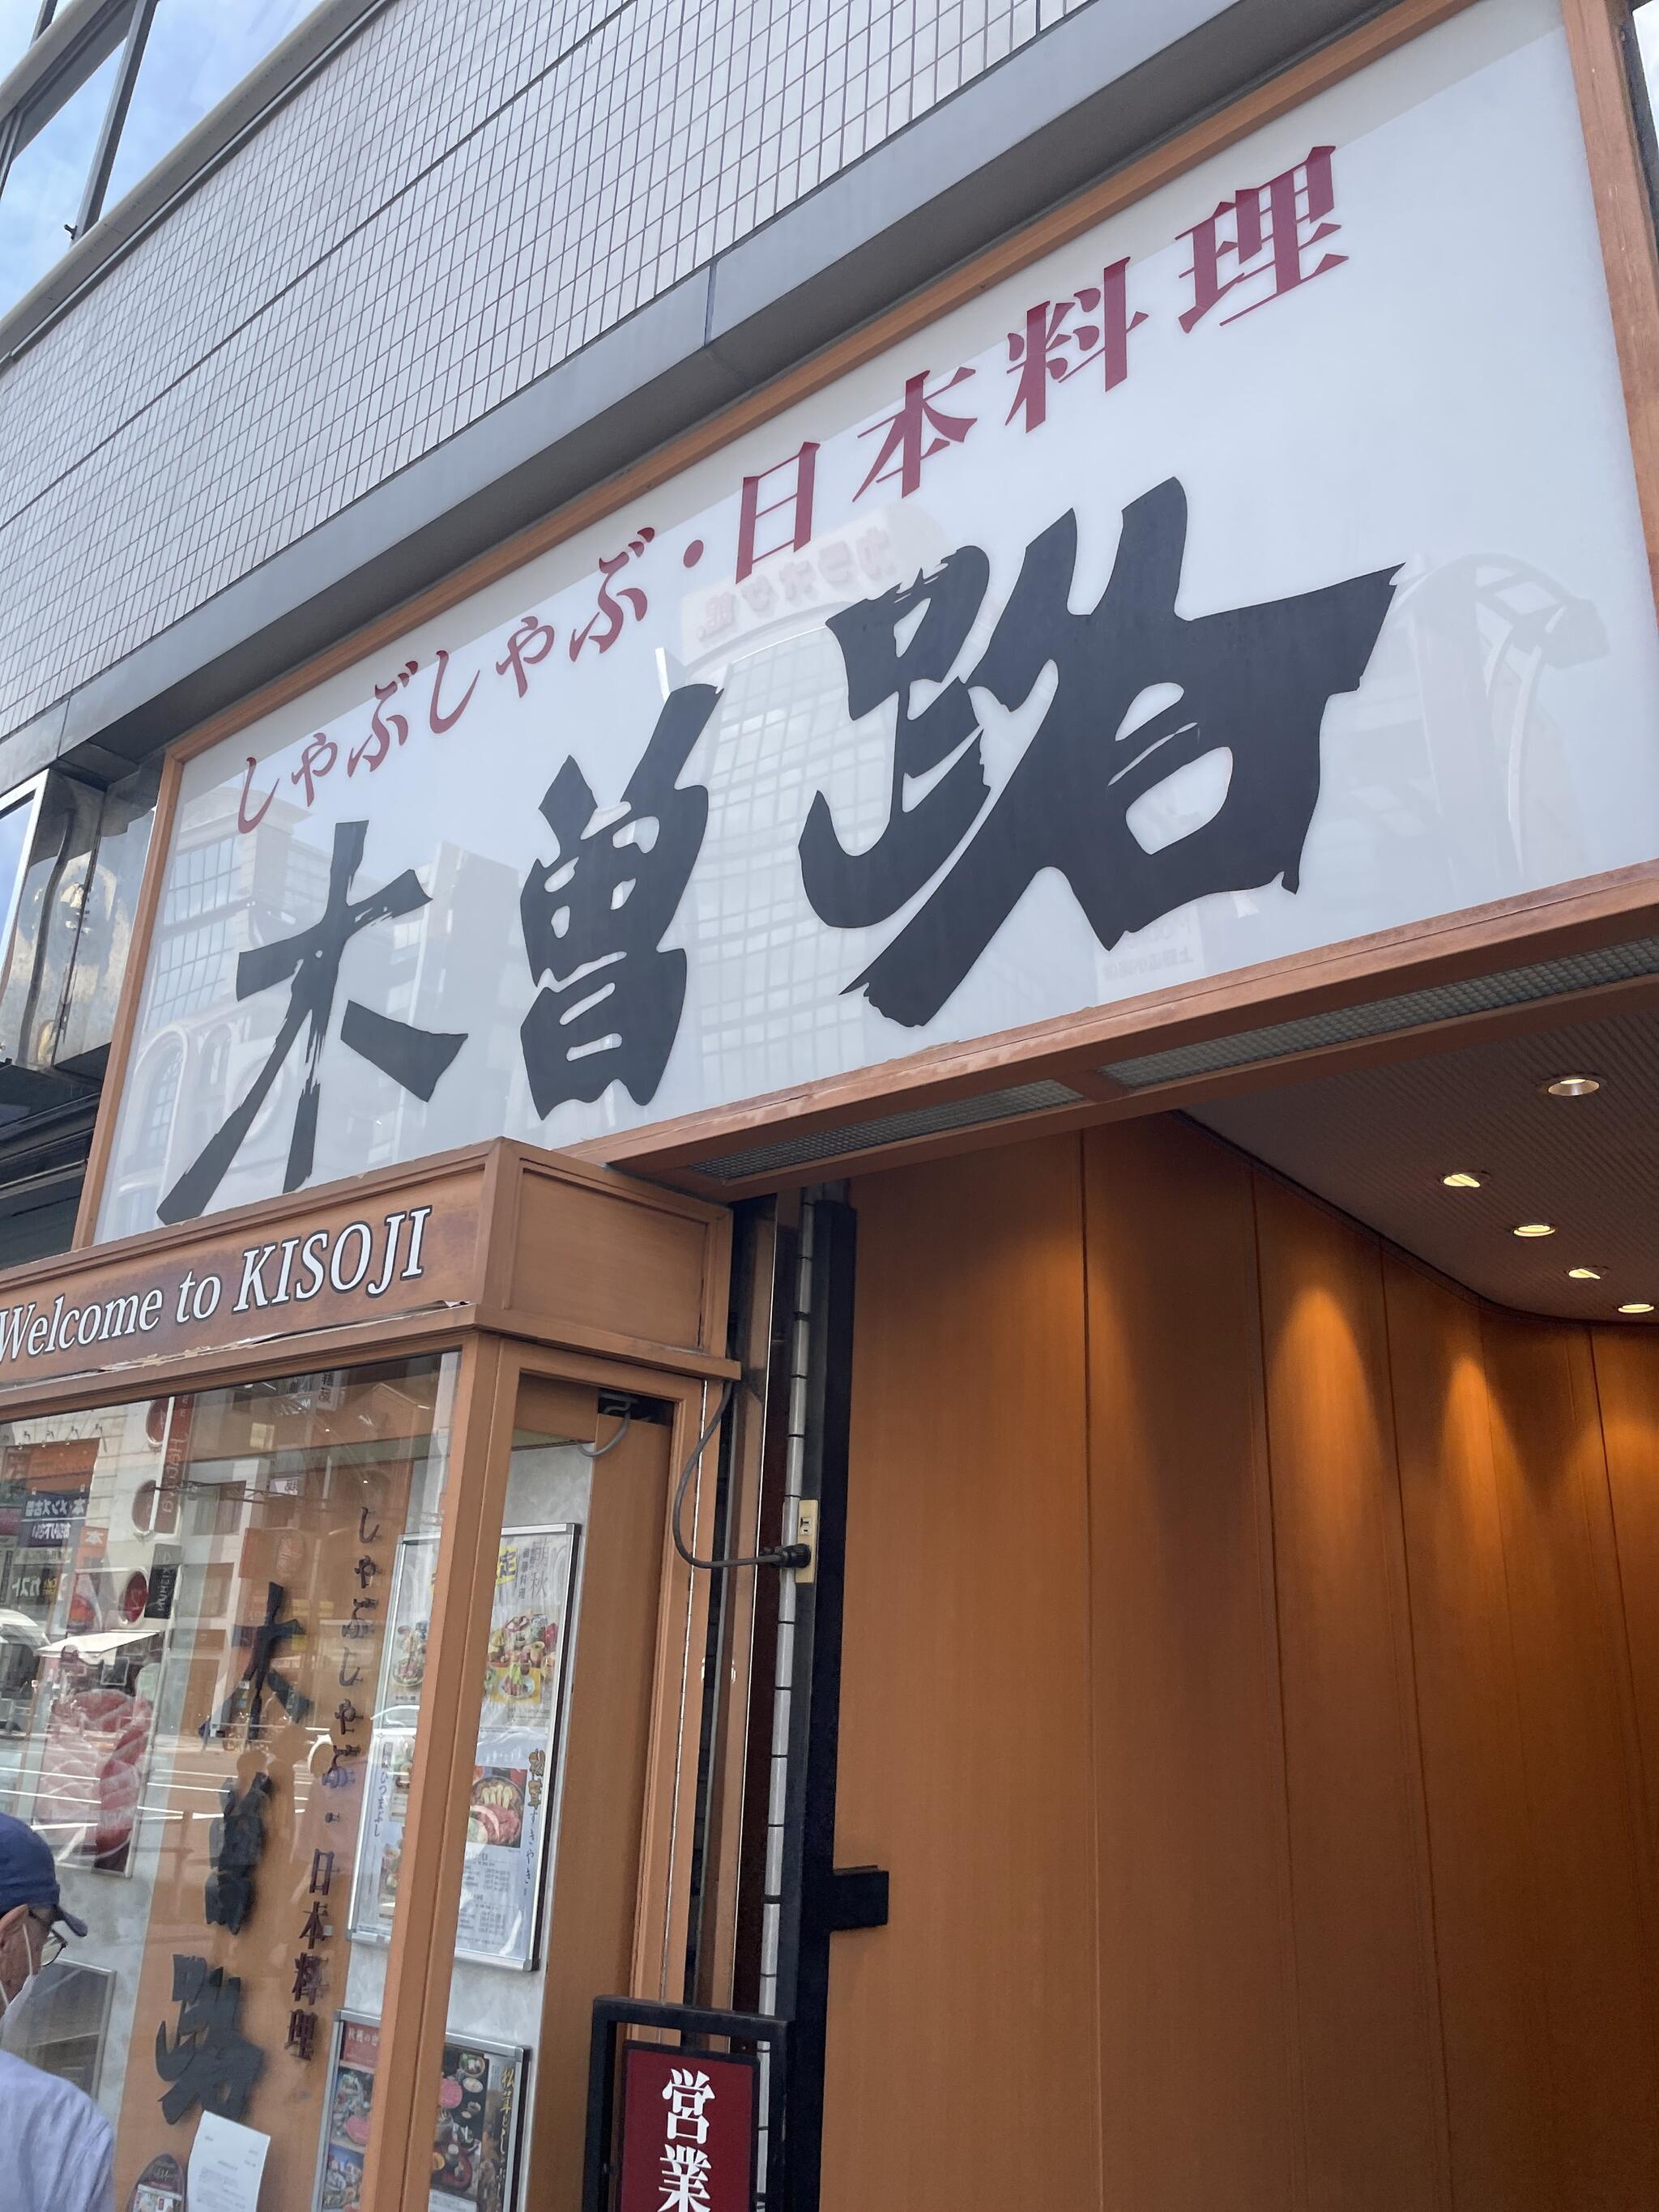 木曽路 上野店の代表写真5